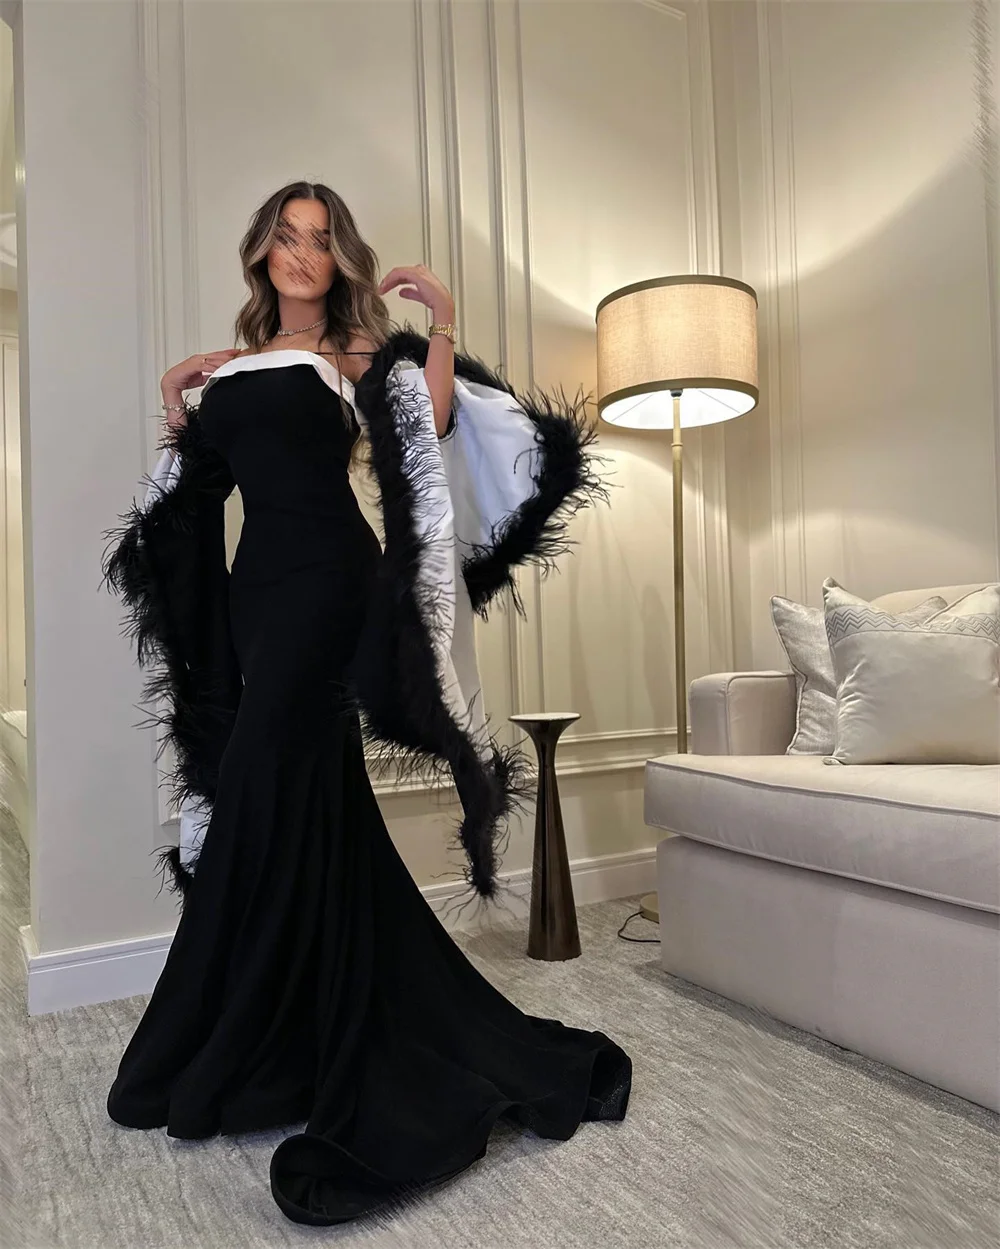 

FLORINE TULIRAIN Black Elegant Strapless Full Sleeve Feathers Mermaid Long Evening Dress Floor Length Sweep Train Prom Gown New